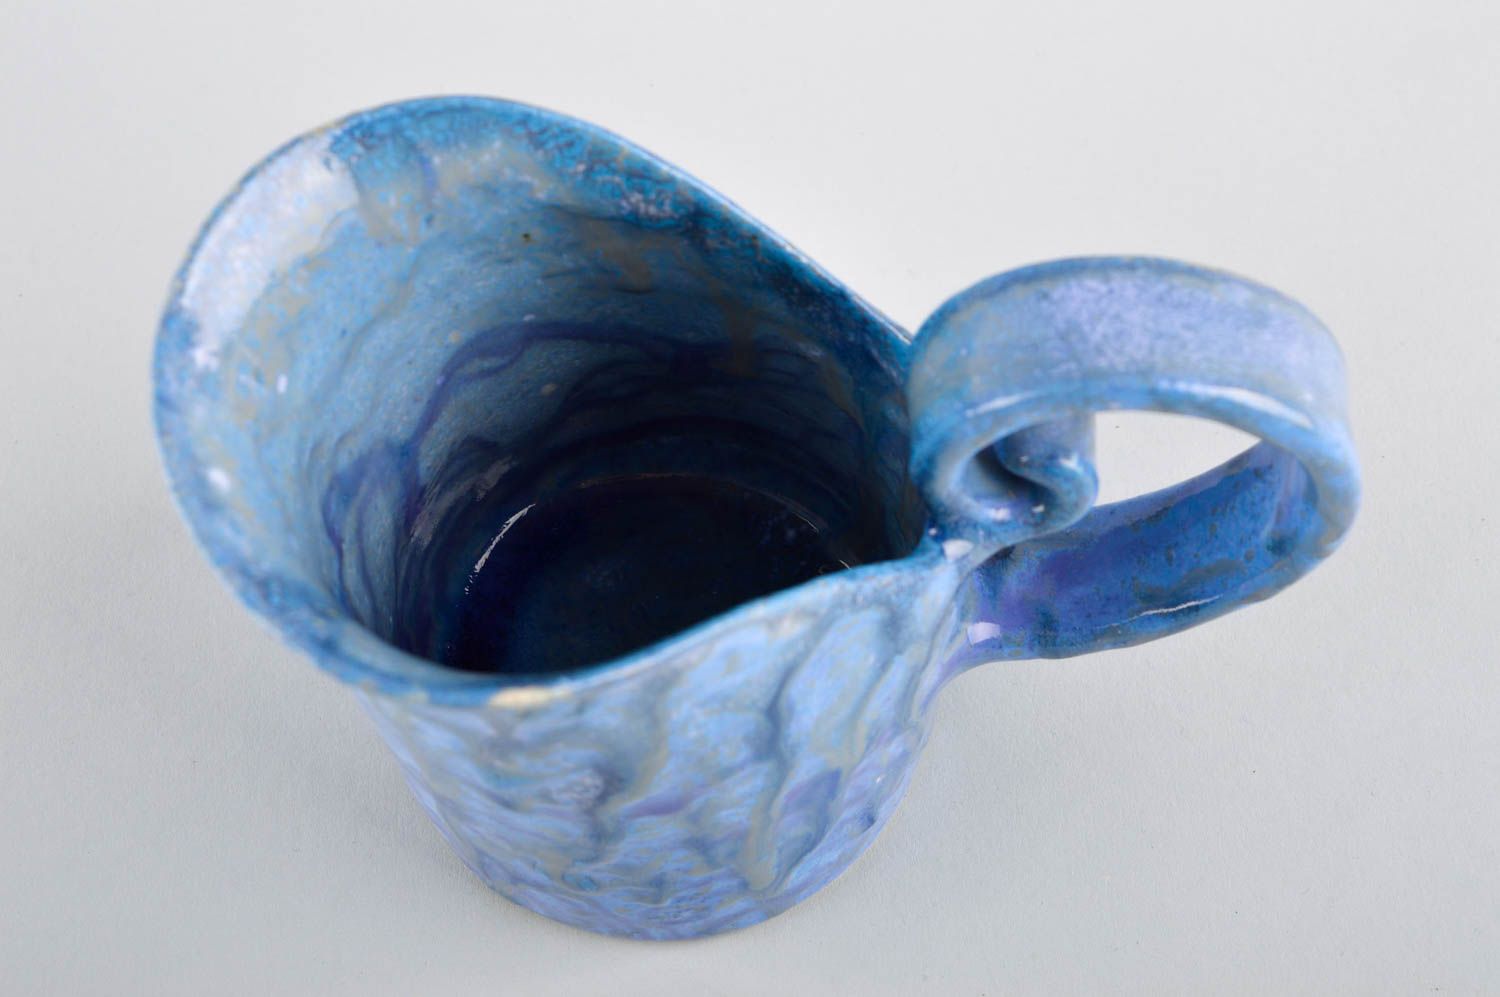 12 oz ceramic water jug in blue color with handle 1,1 lb photo 4